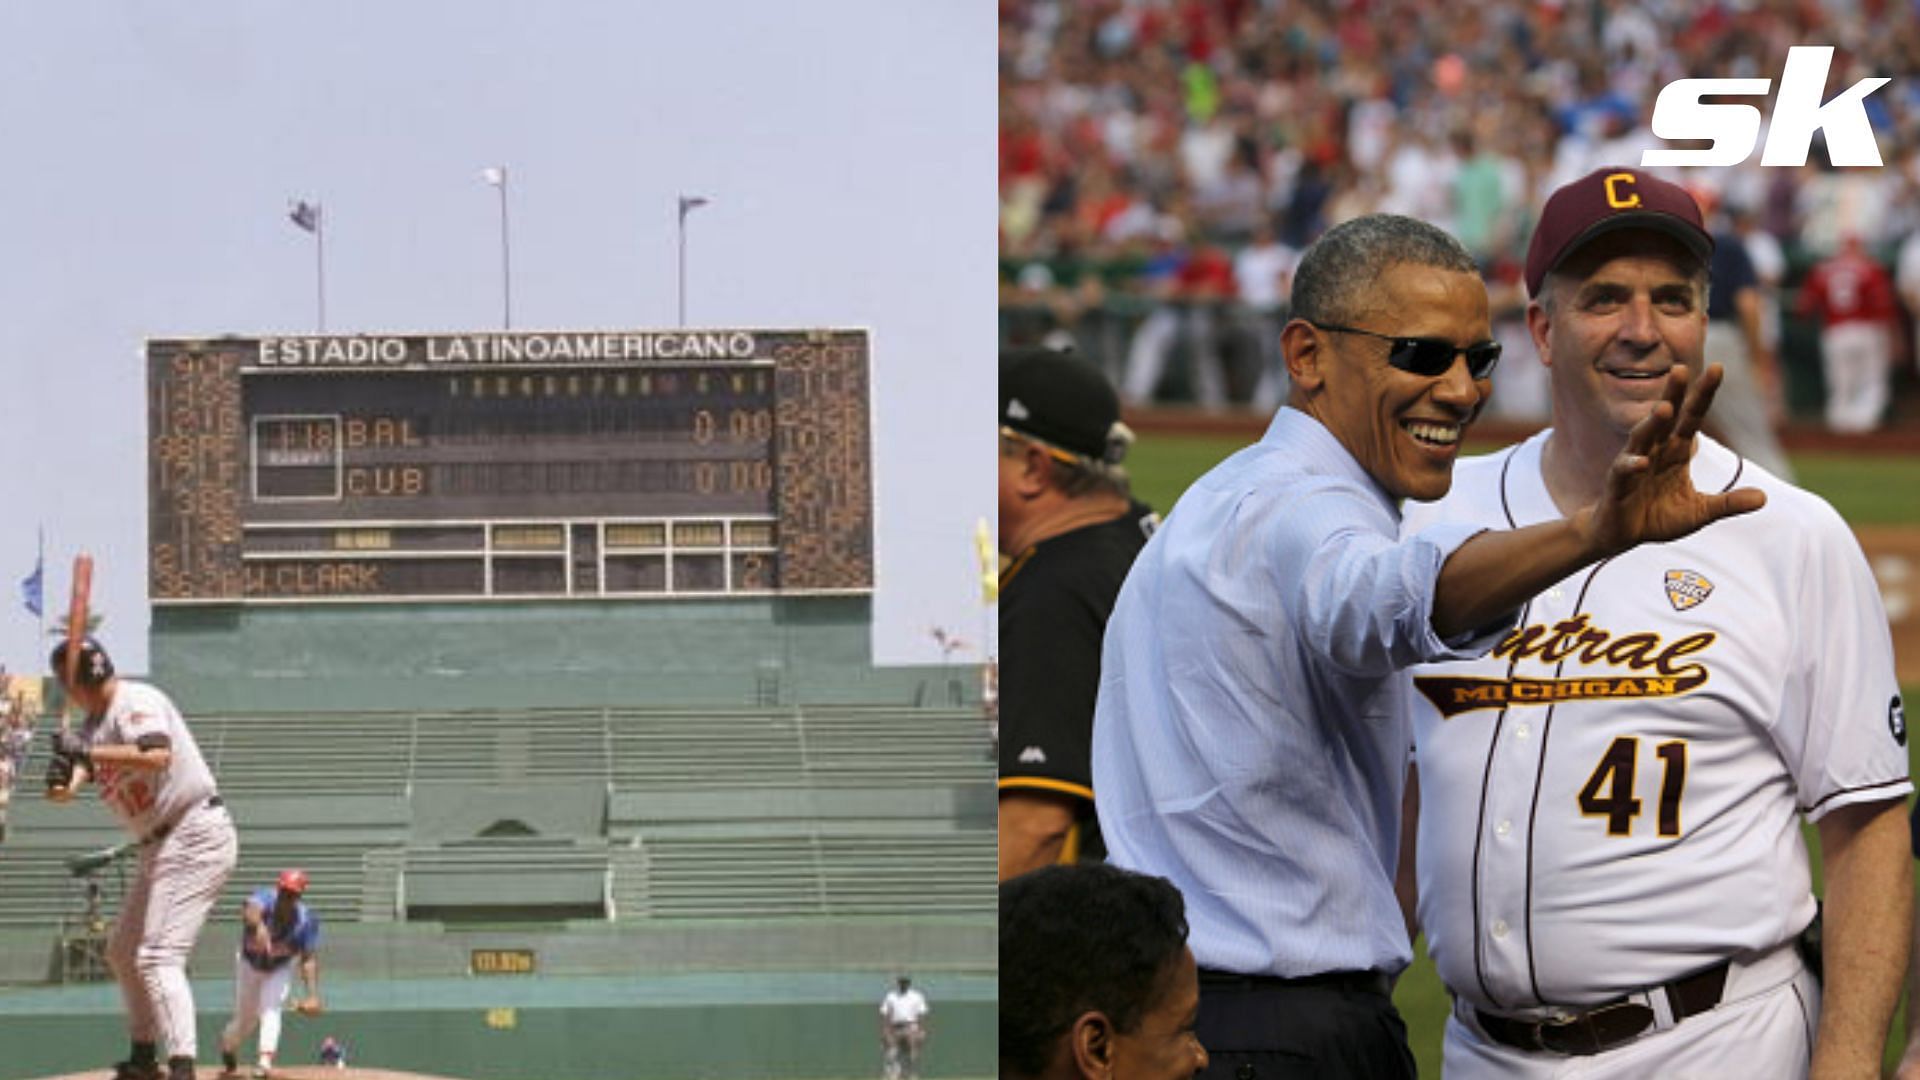 Barack Obama attends game at Estadio Latinoamericano stadium along with Cuban President